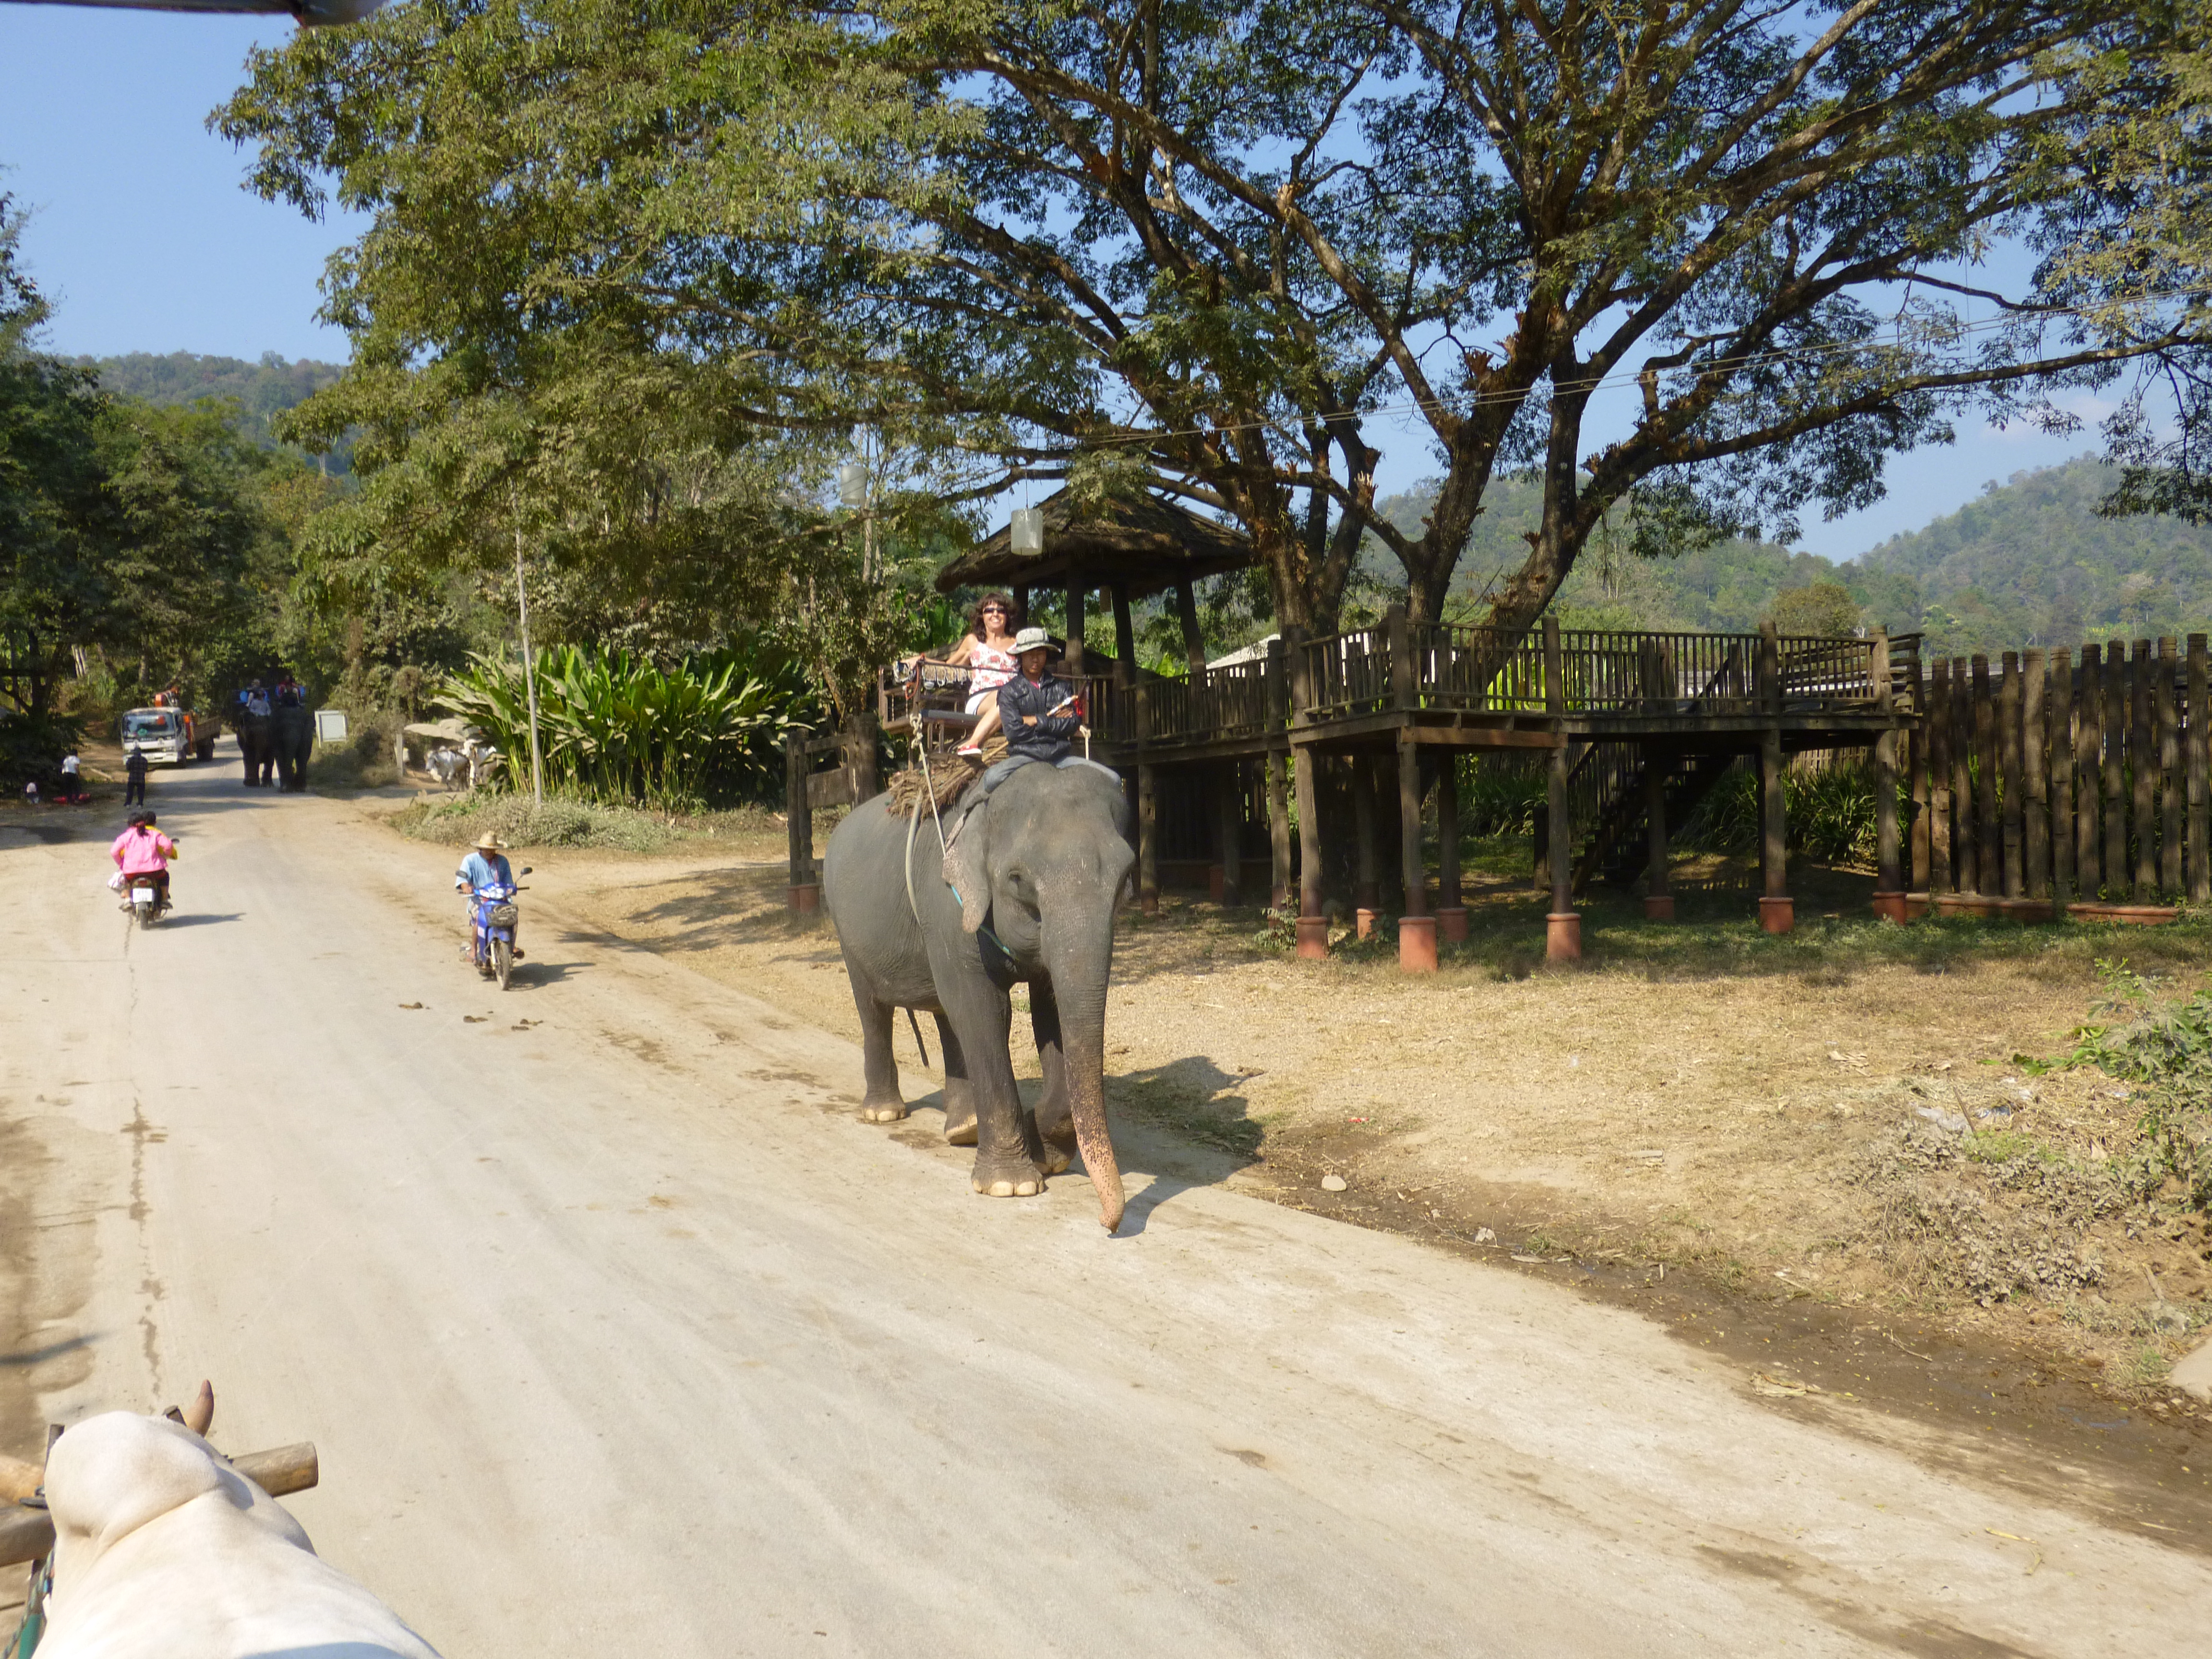 Riding the Elephant, Activity, Animal, Elephant, Human, HQ Photo